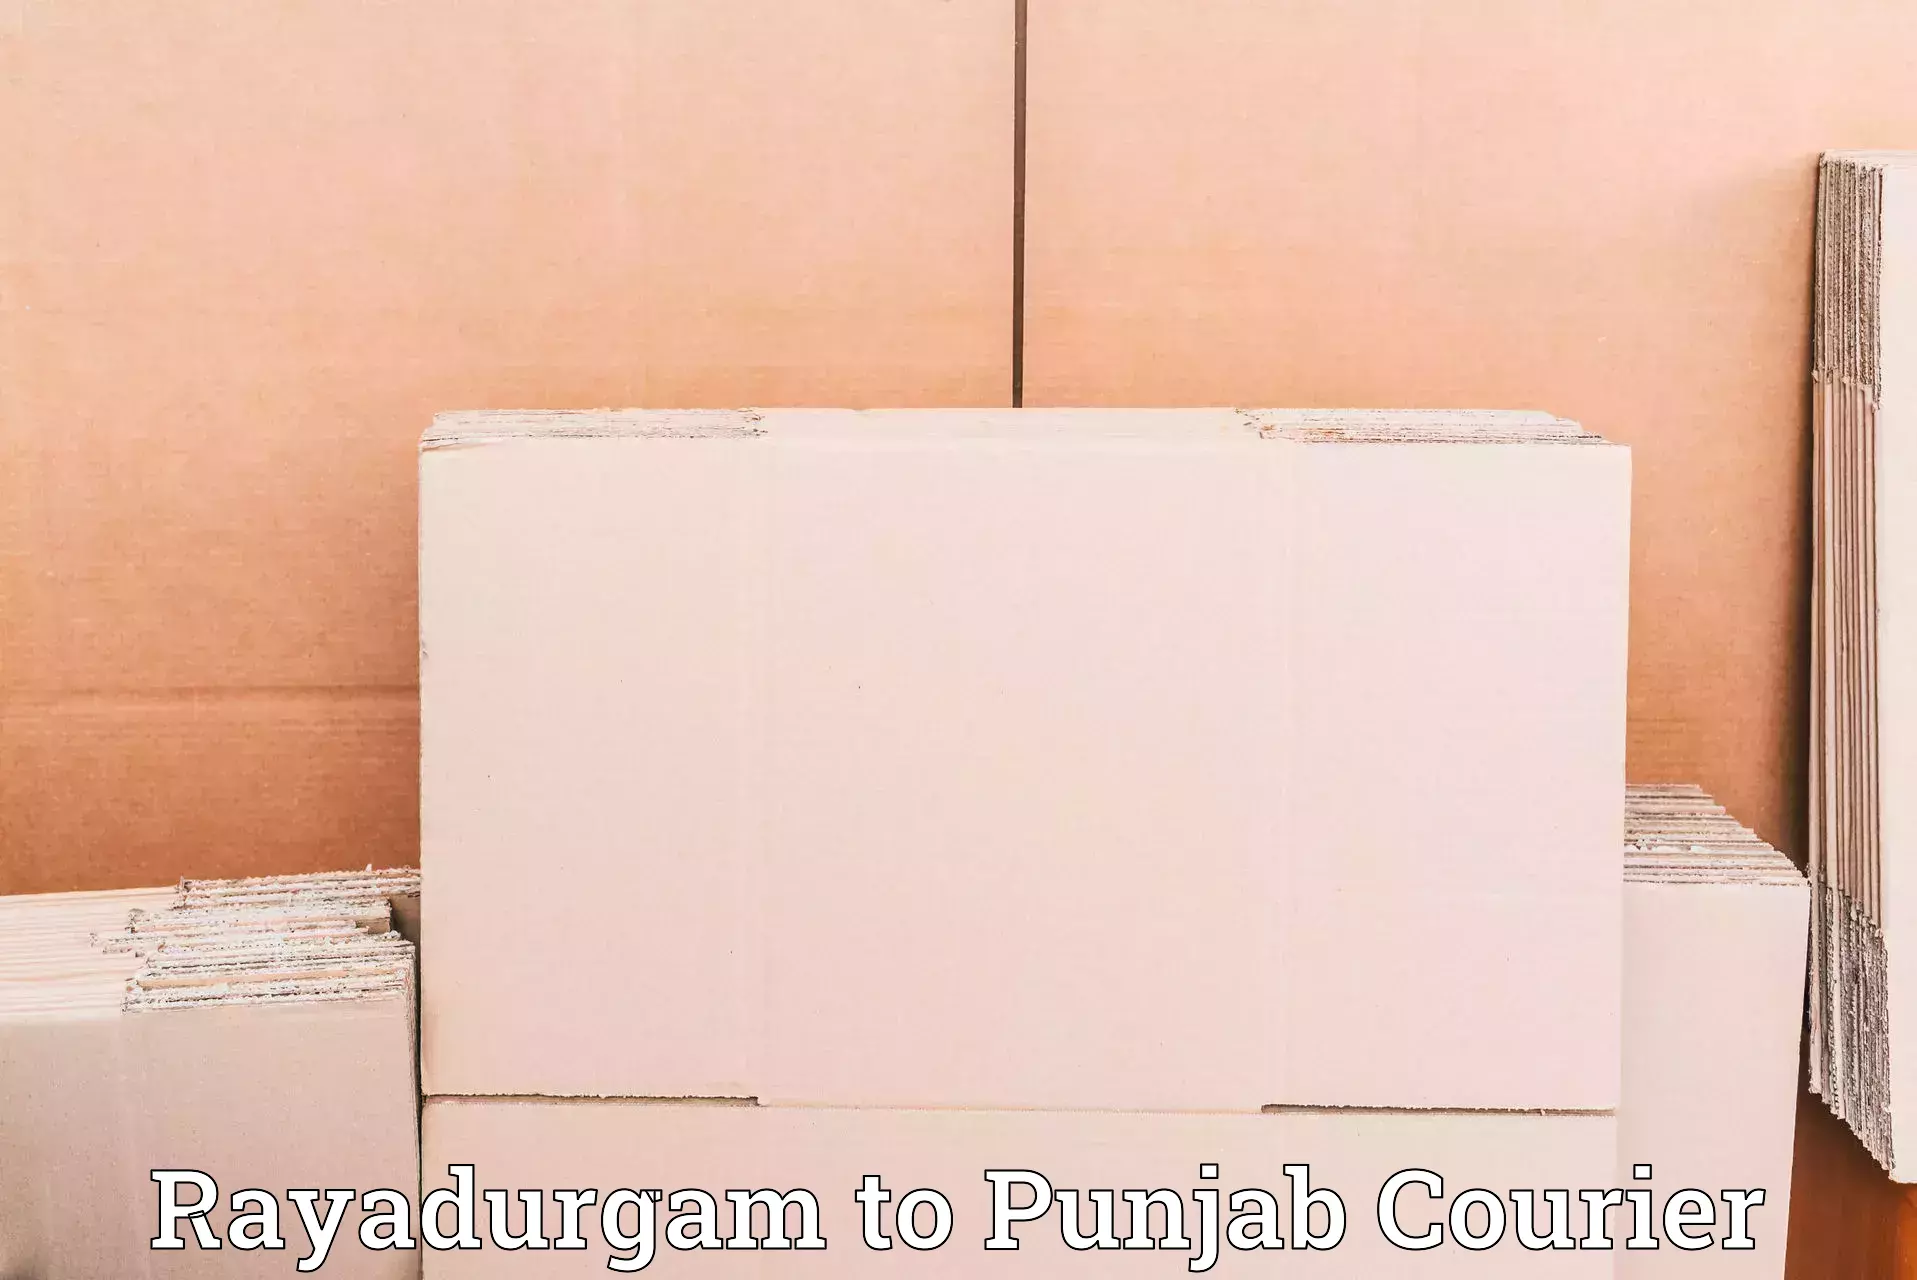 Reliable logistics providers Rayadurgam to Punjab